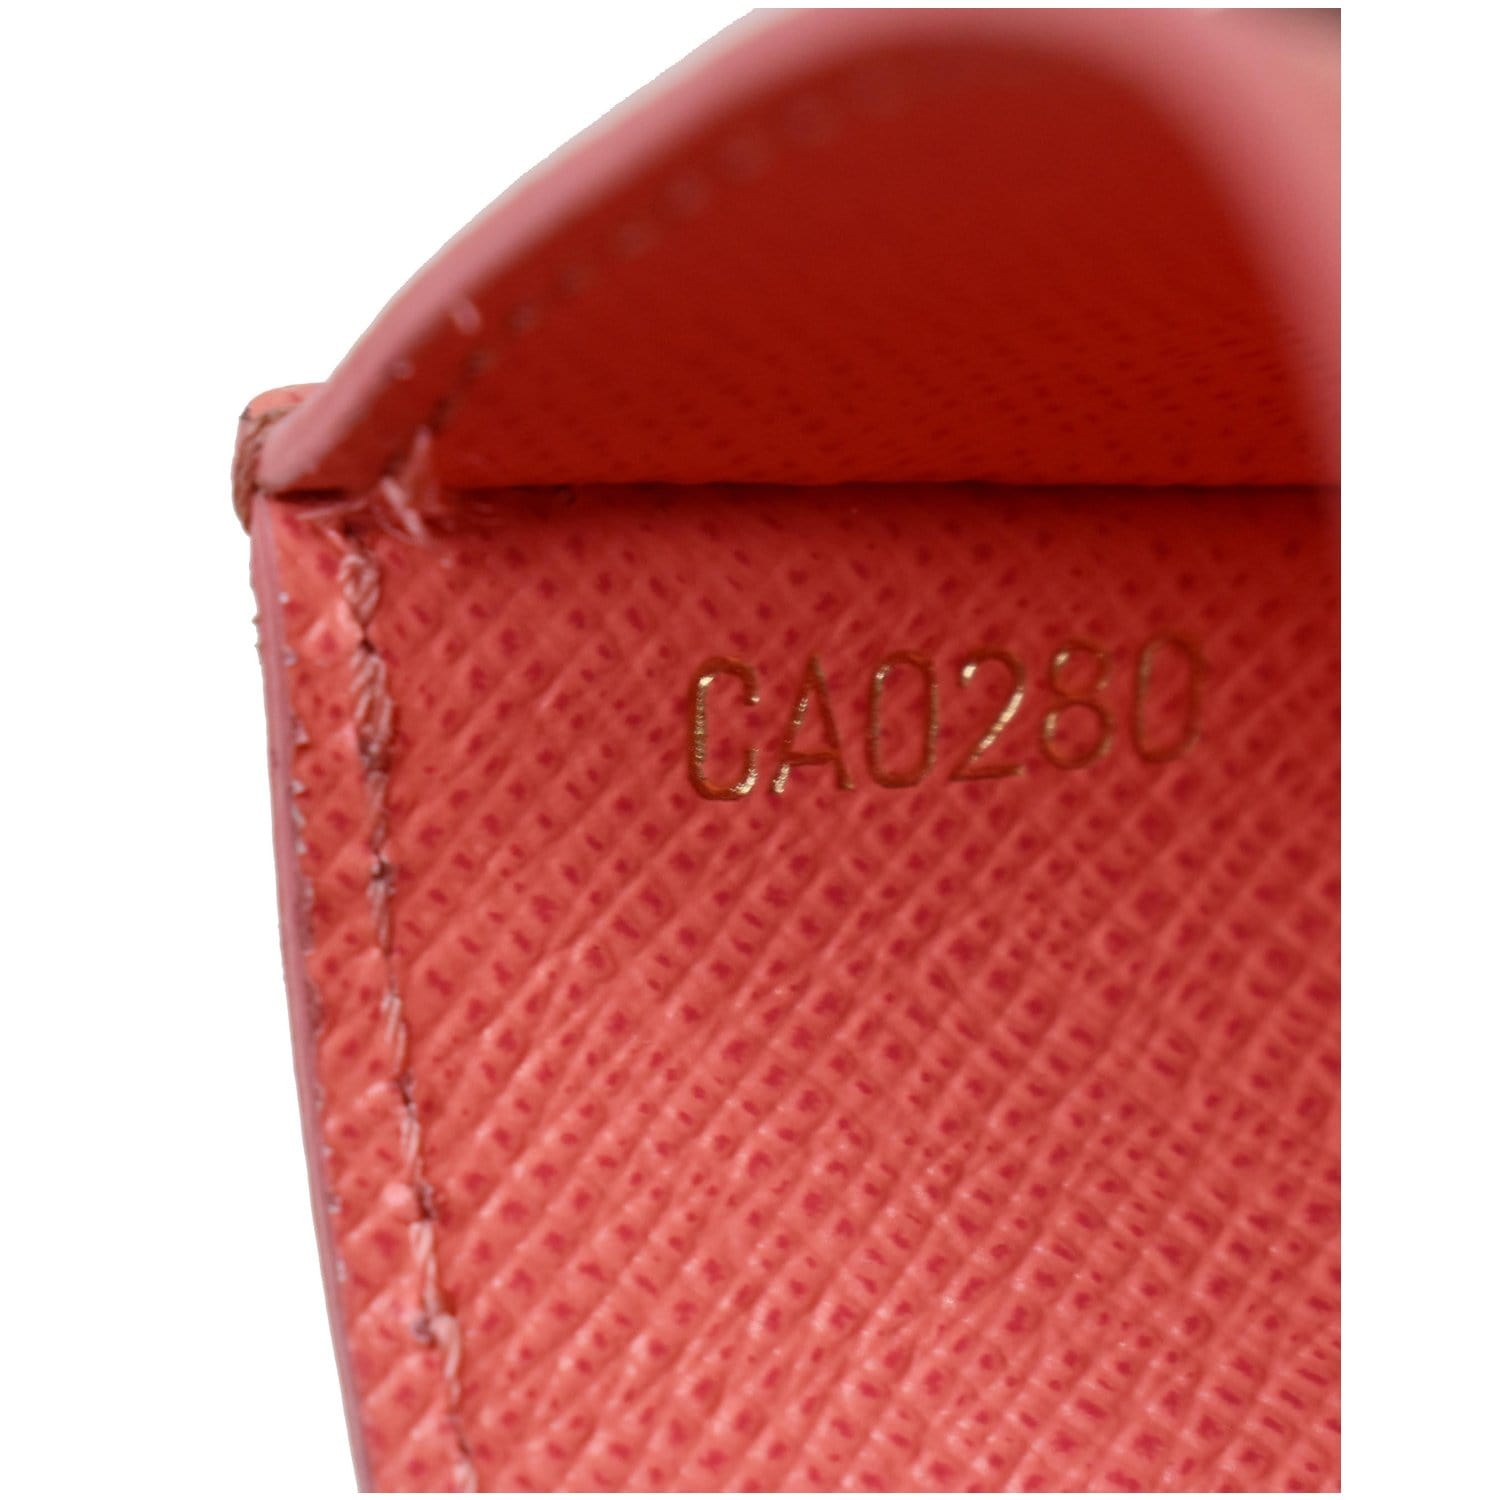 Louis Vuitton Damier Azur Card Holder QJA0P70NWB000